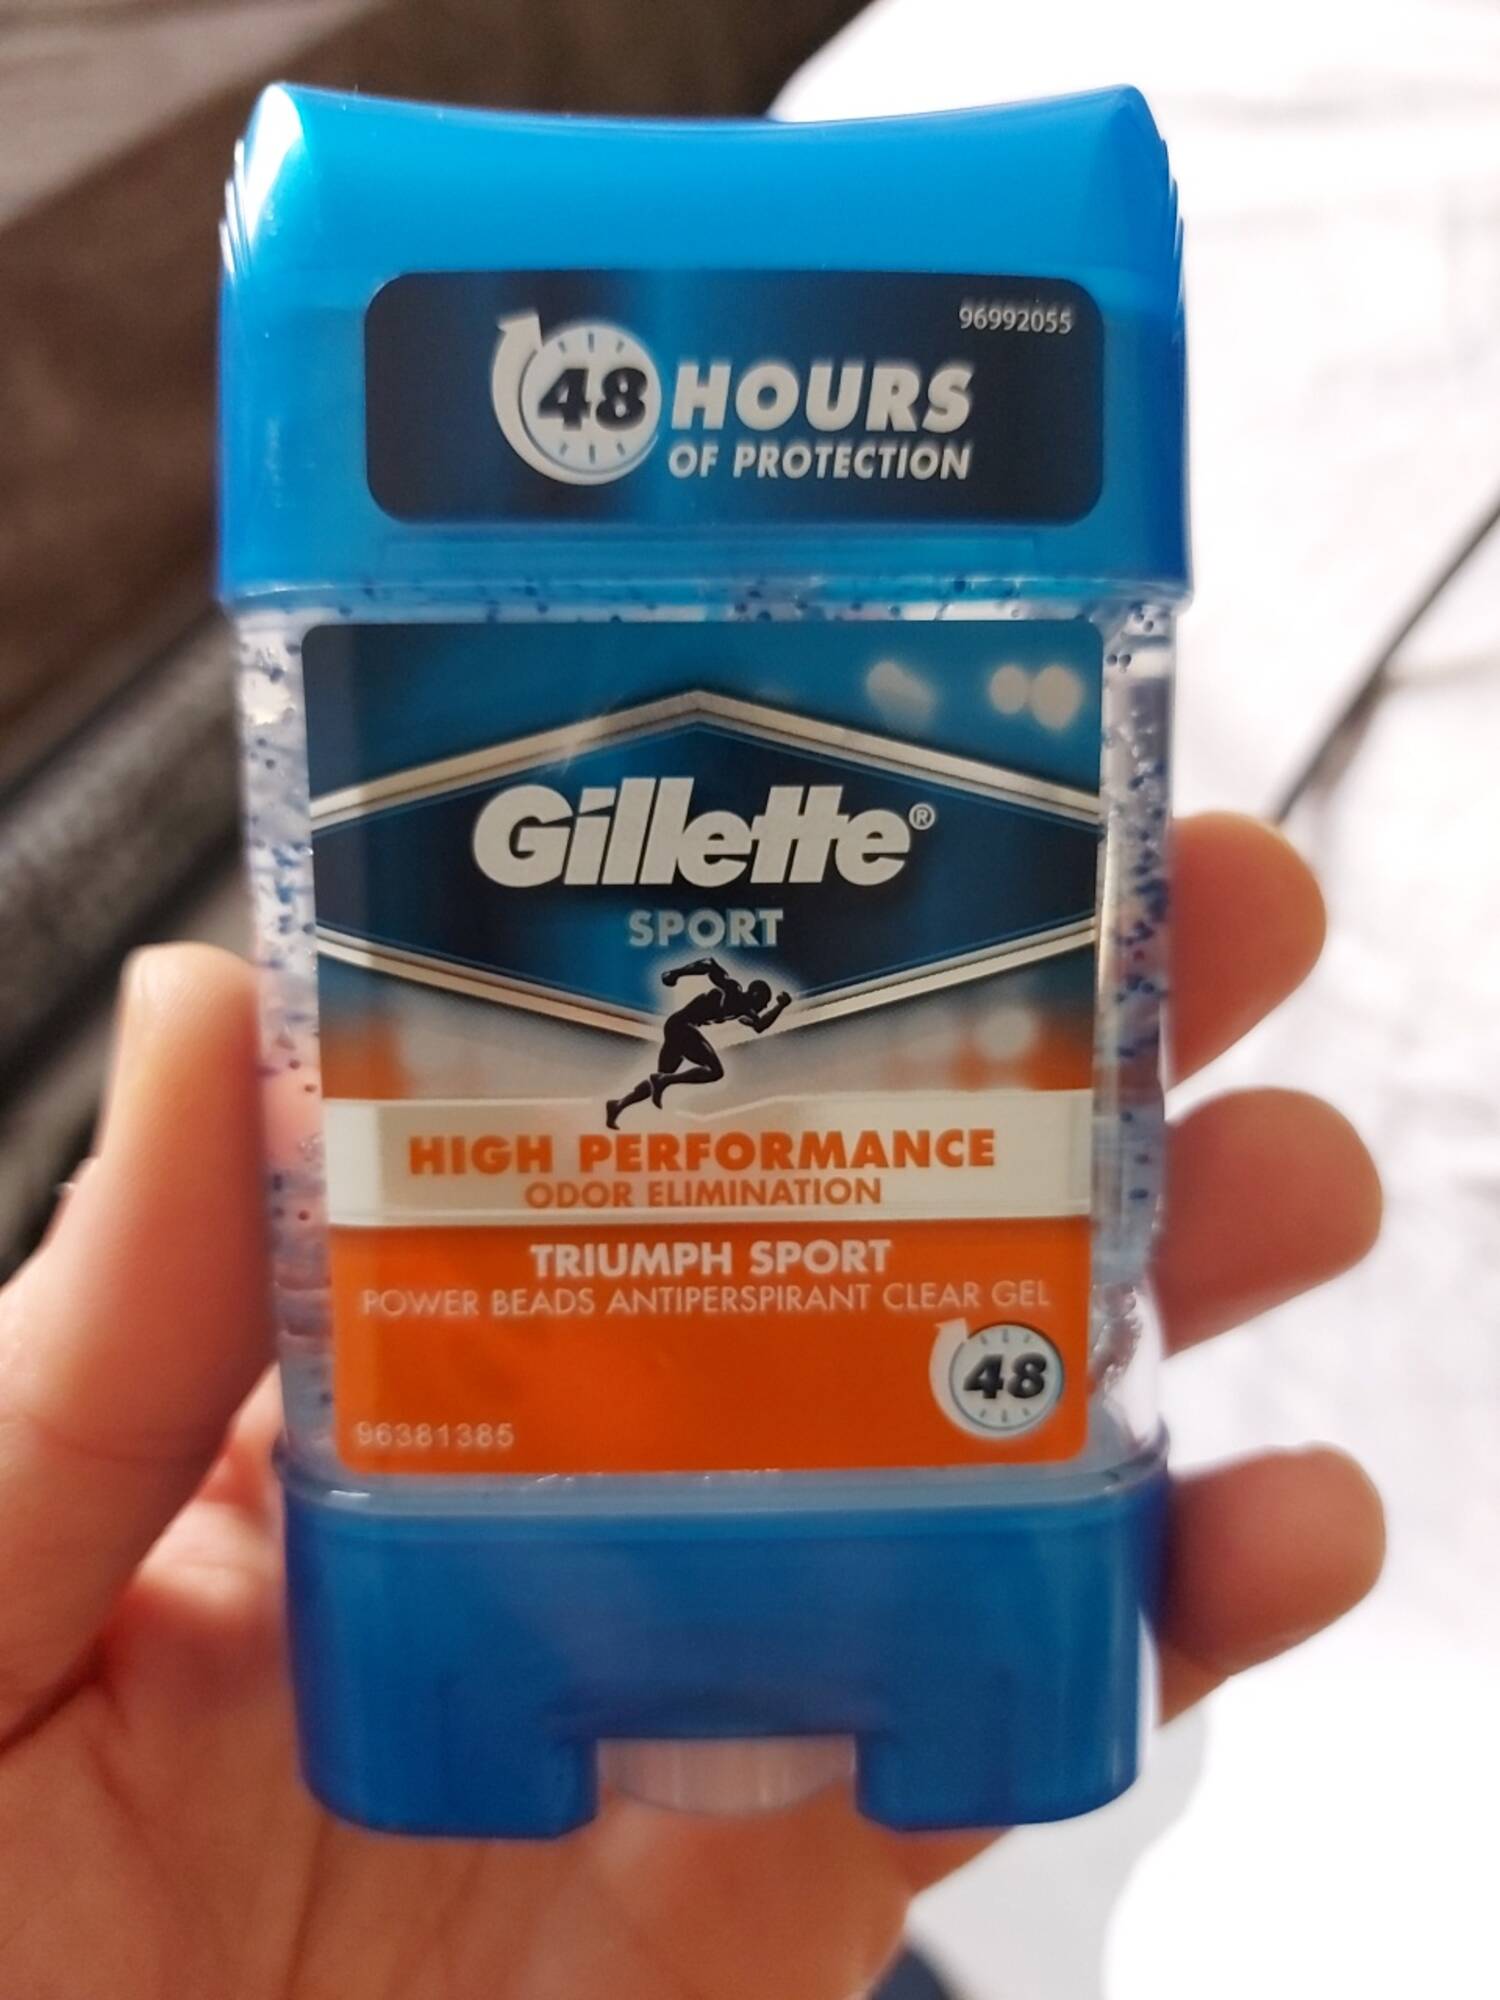 GILLETTE - Triumph sport - Power beads antiperspirant clear gel 48h